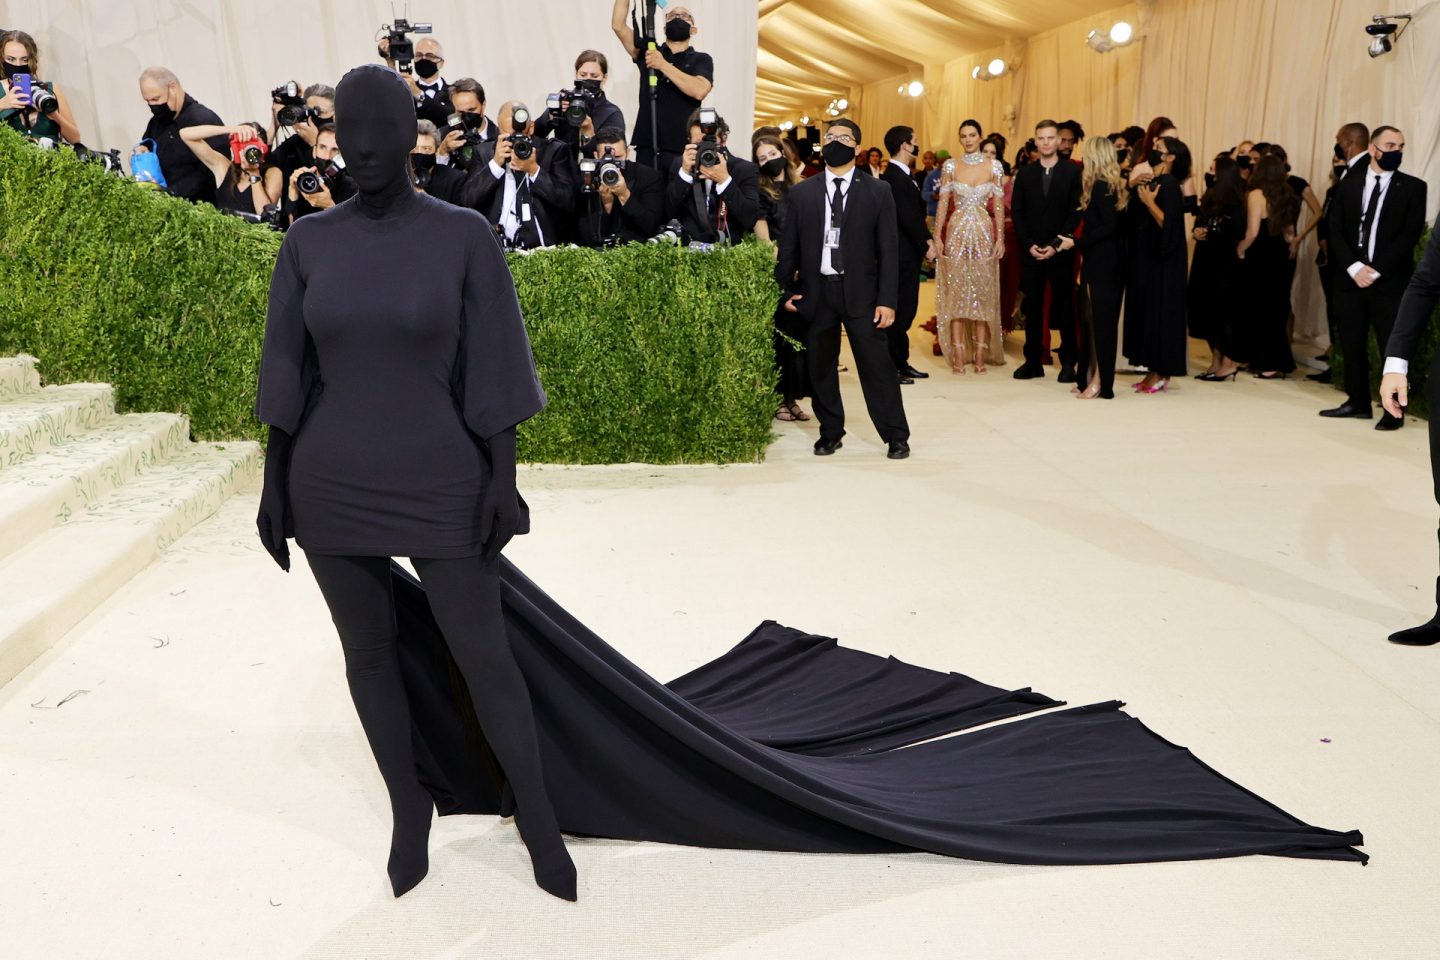 Kim Kardashian in Balenciaga Met gala 2021 outfits